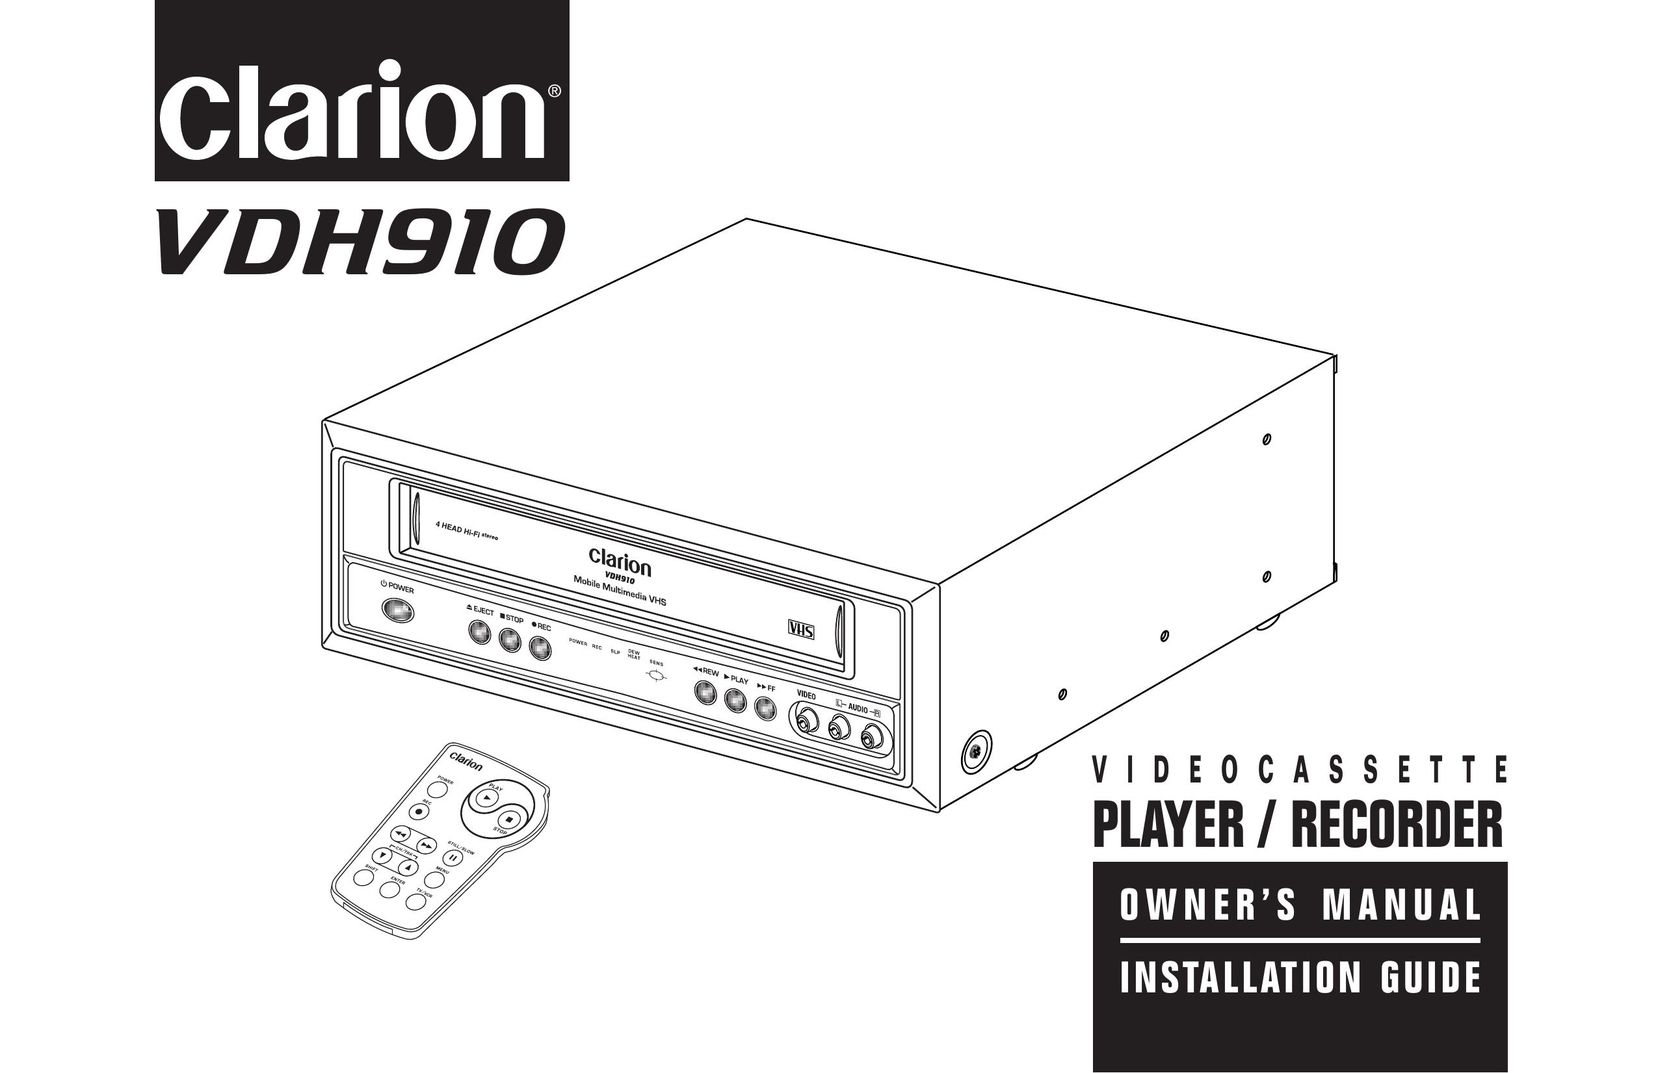 Clarion VDH910 Cassette Player User Manual